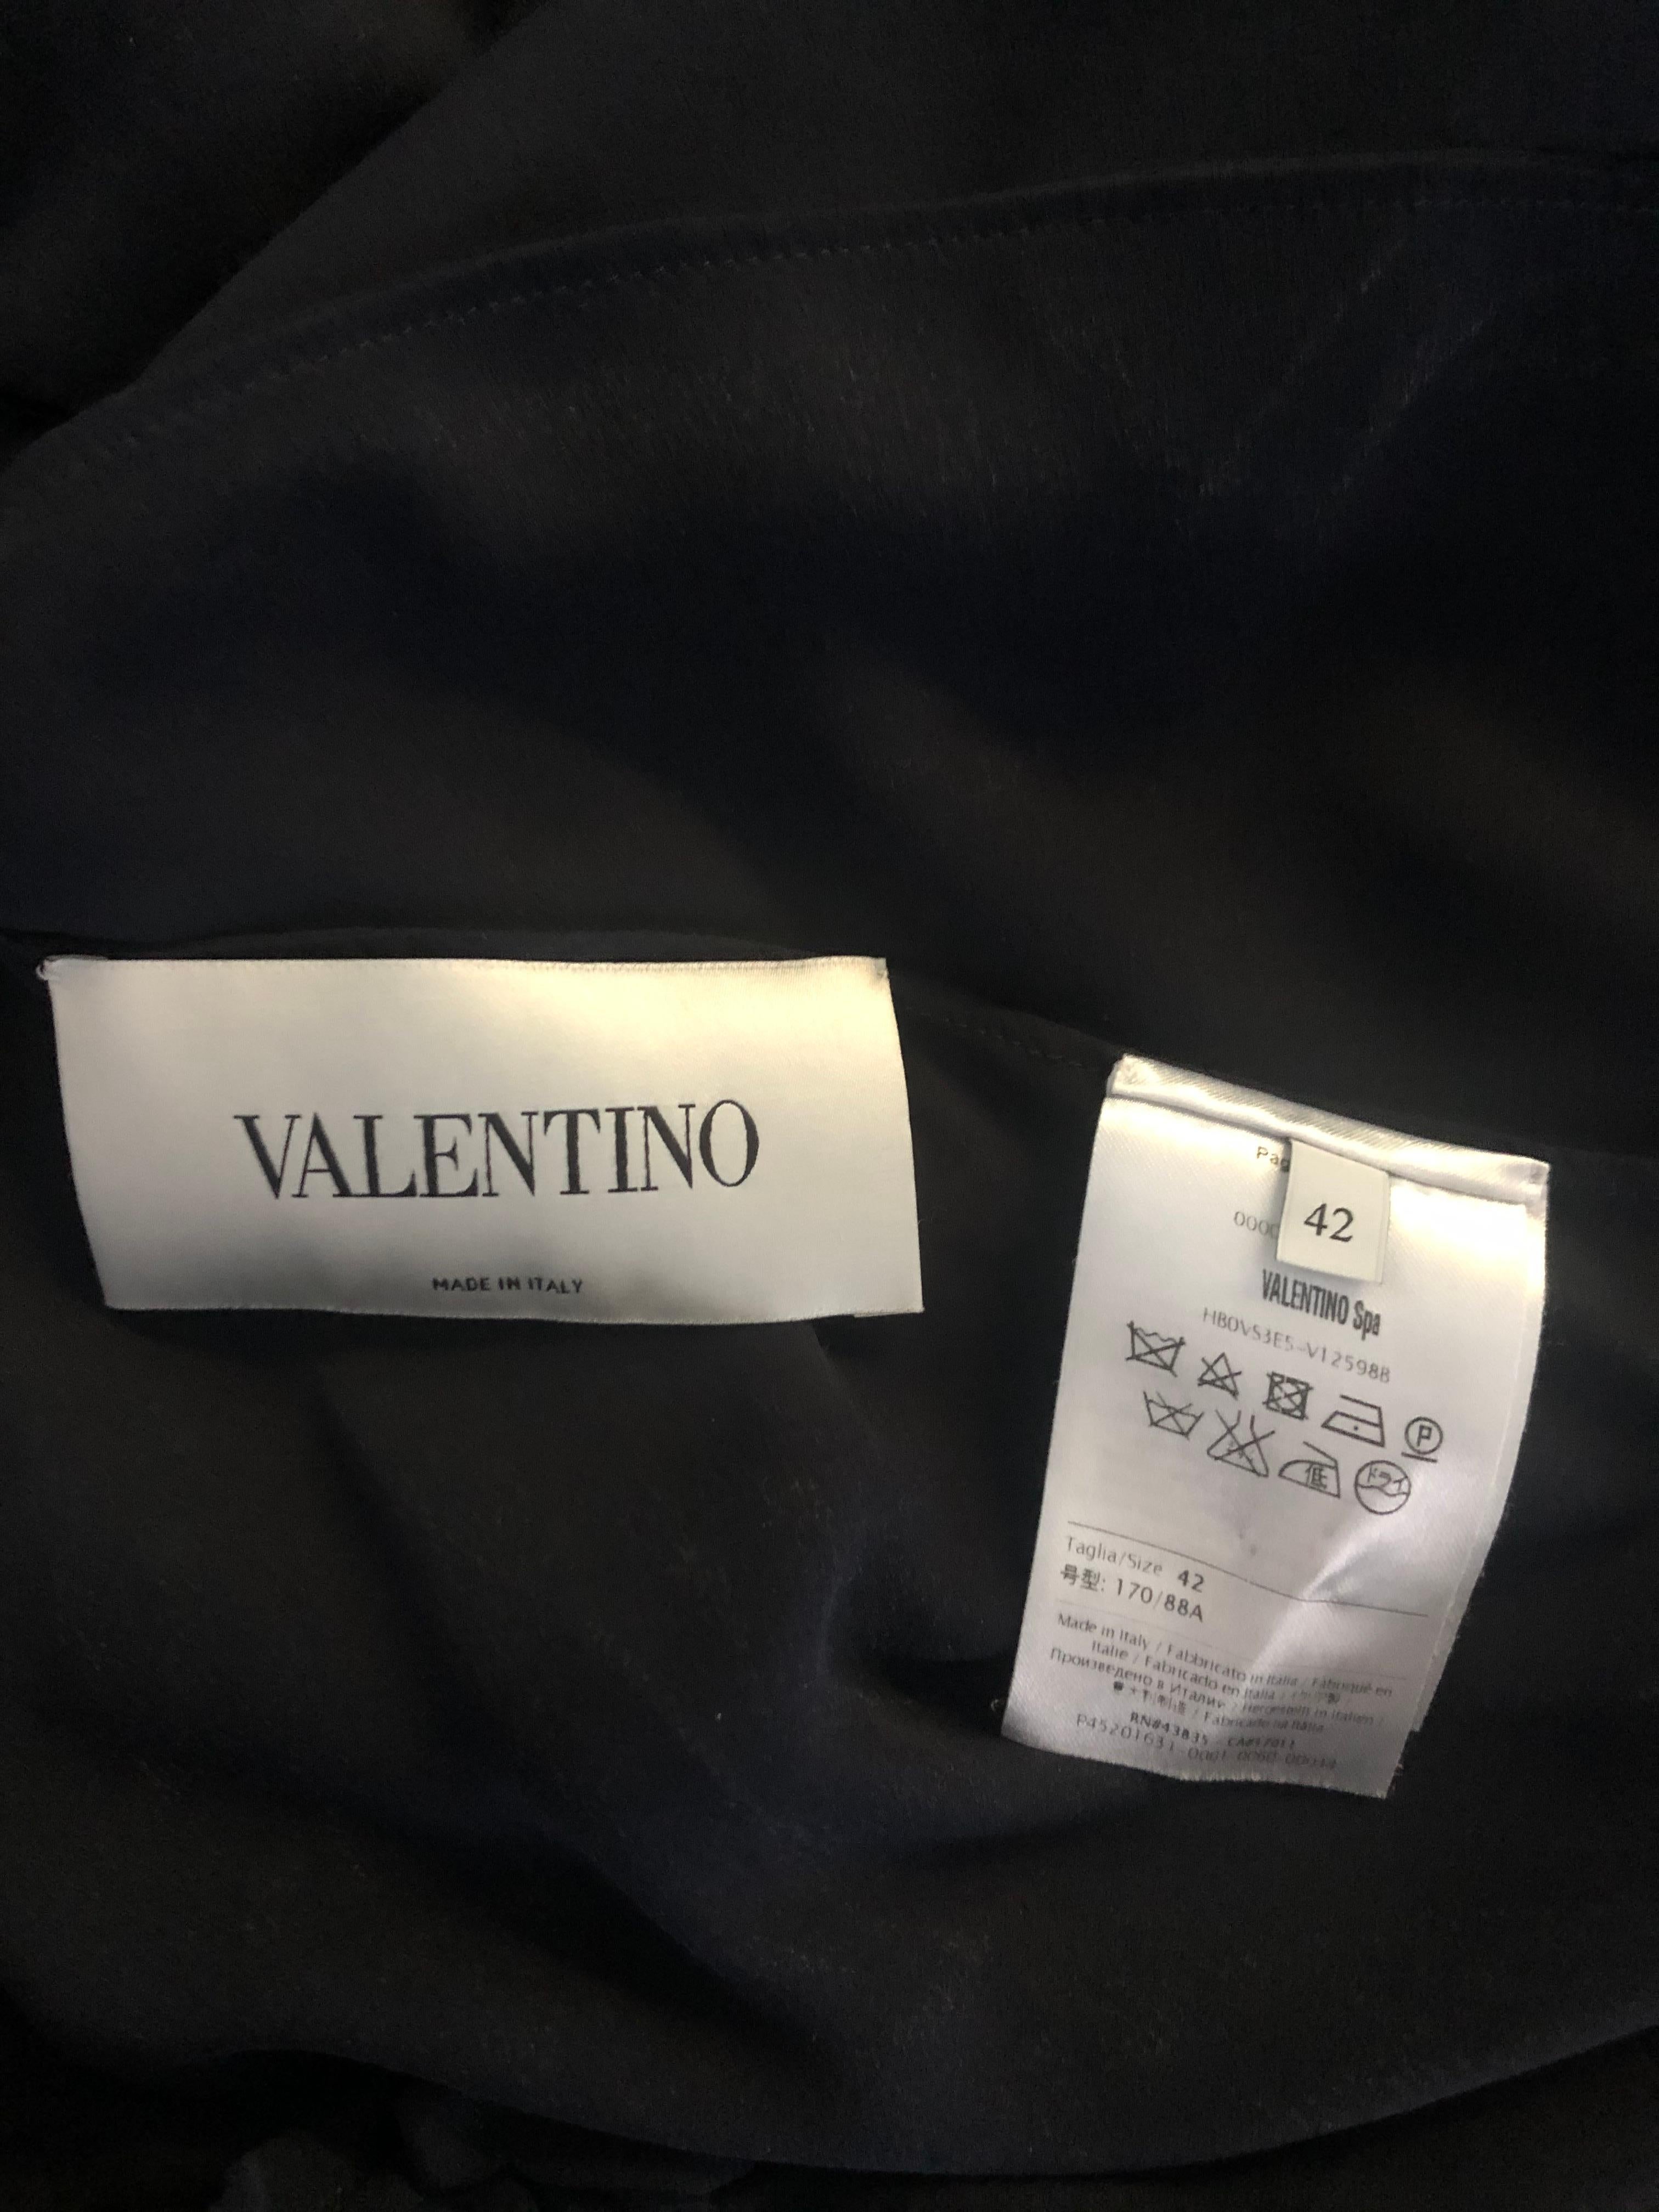 VALENTINO Black Cape Dress Size 42 1